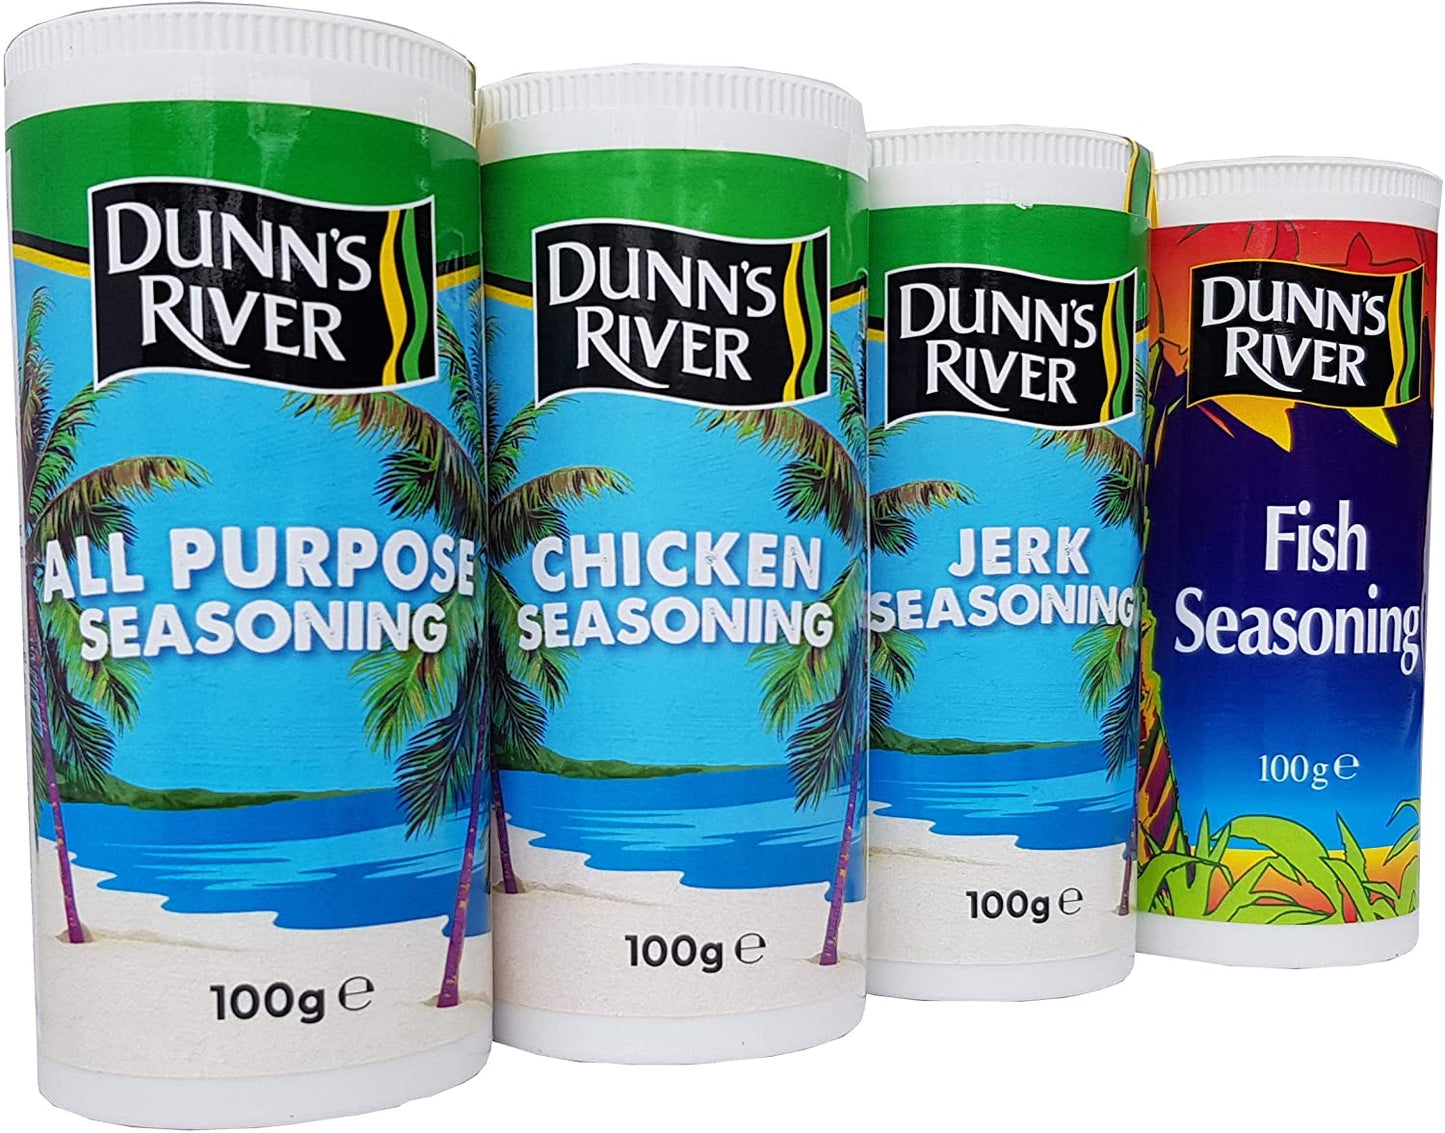 Dunn’s River Seasonings